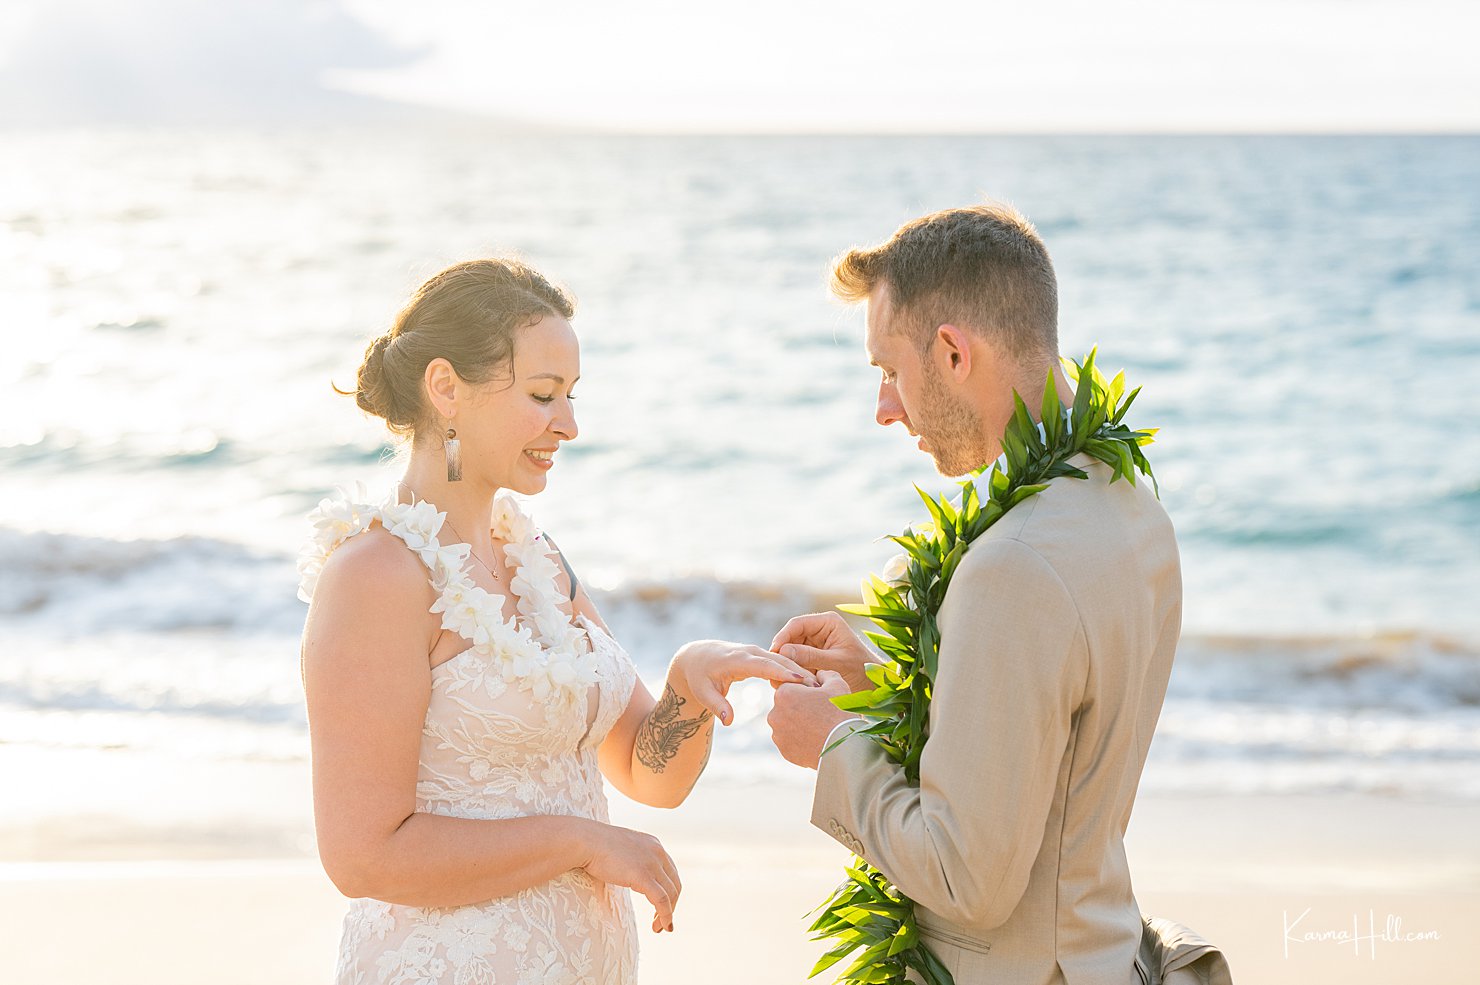 Ring Exchange at a Maui Destination Wedding